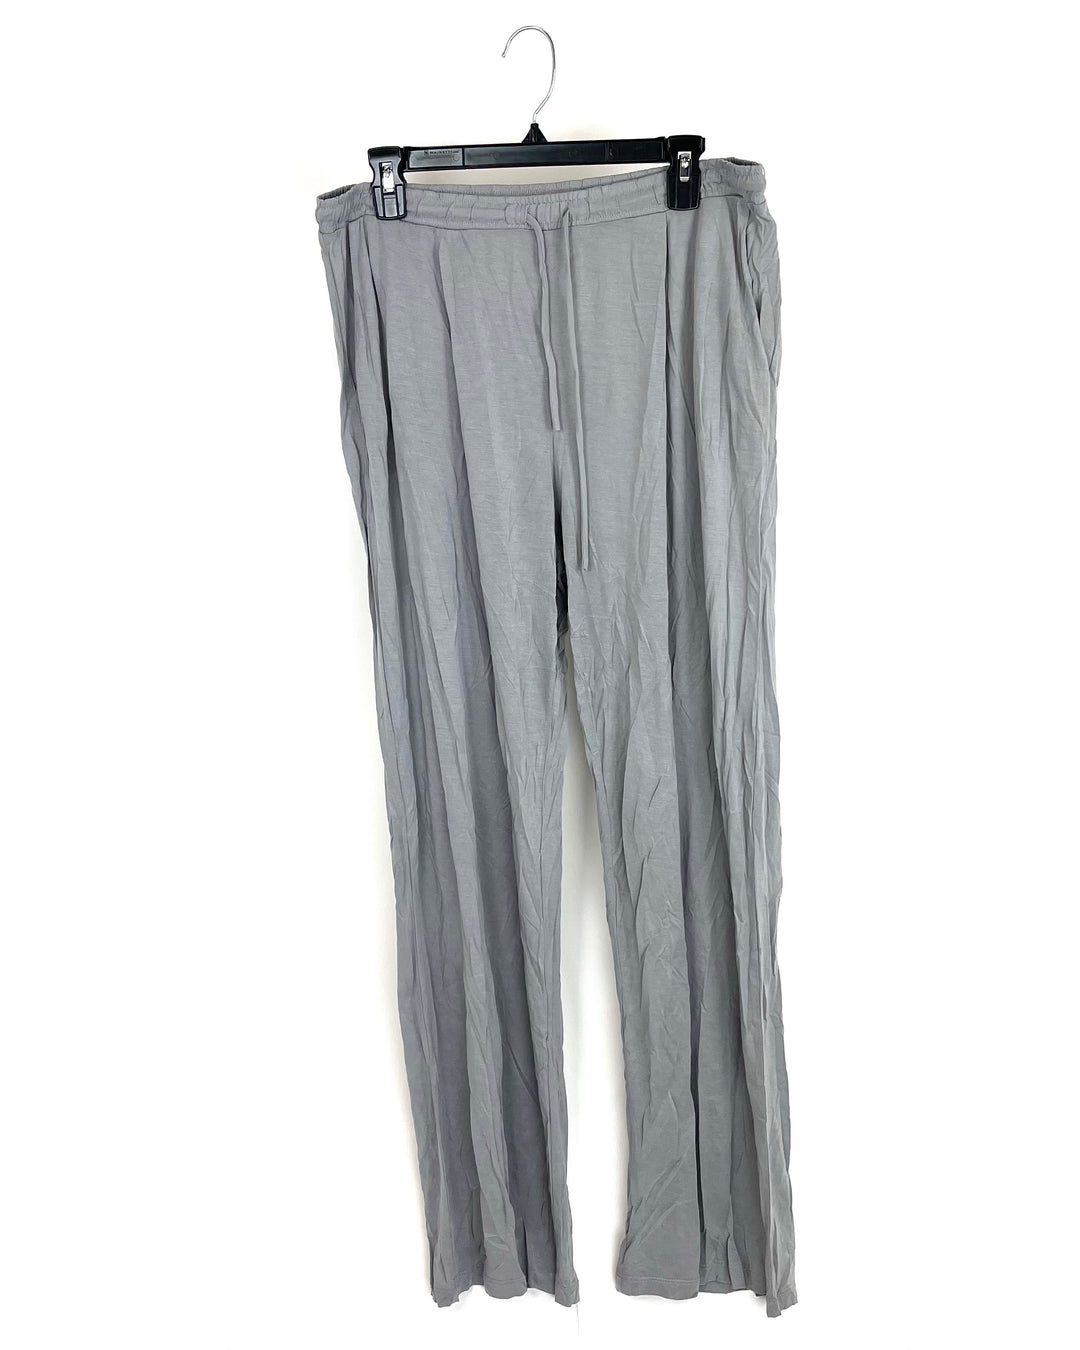 Light Grey Loungewear Pants - Extra Large